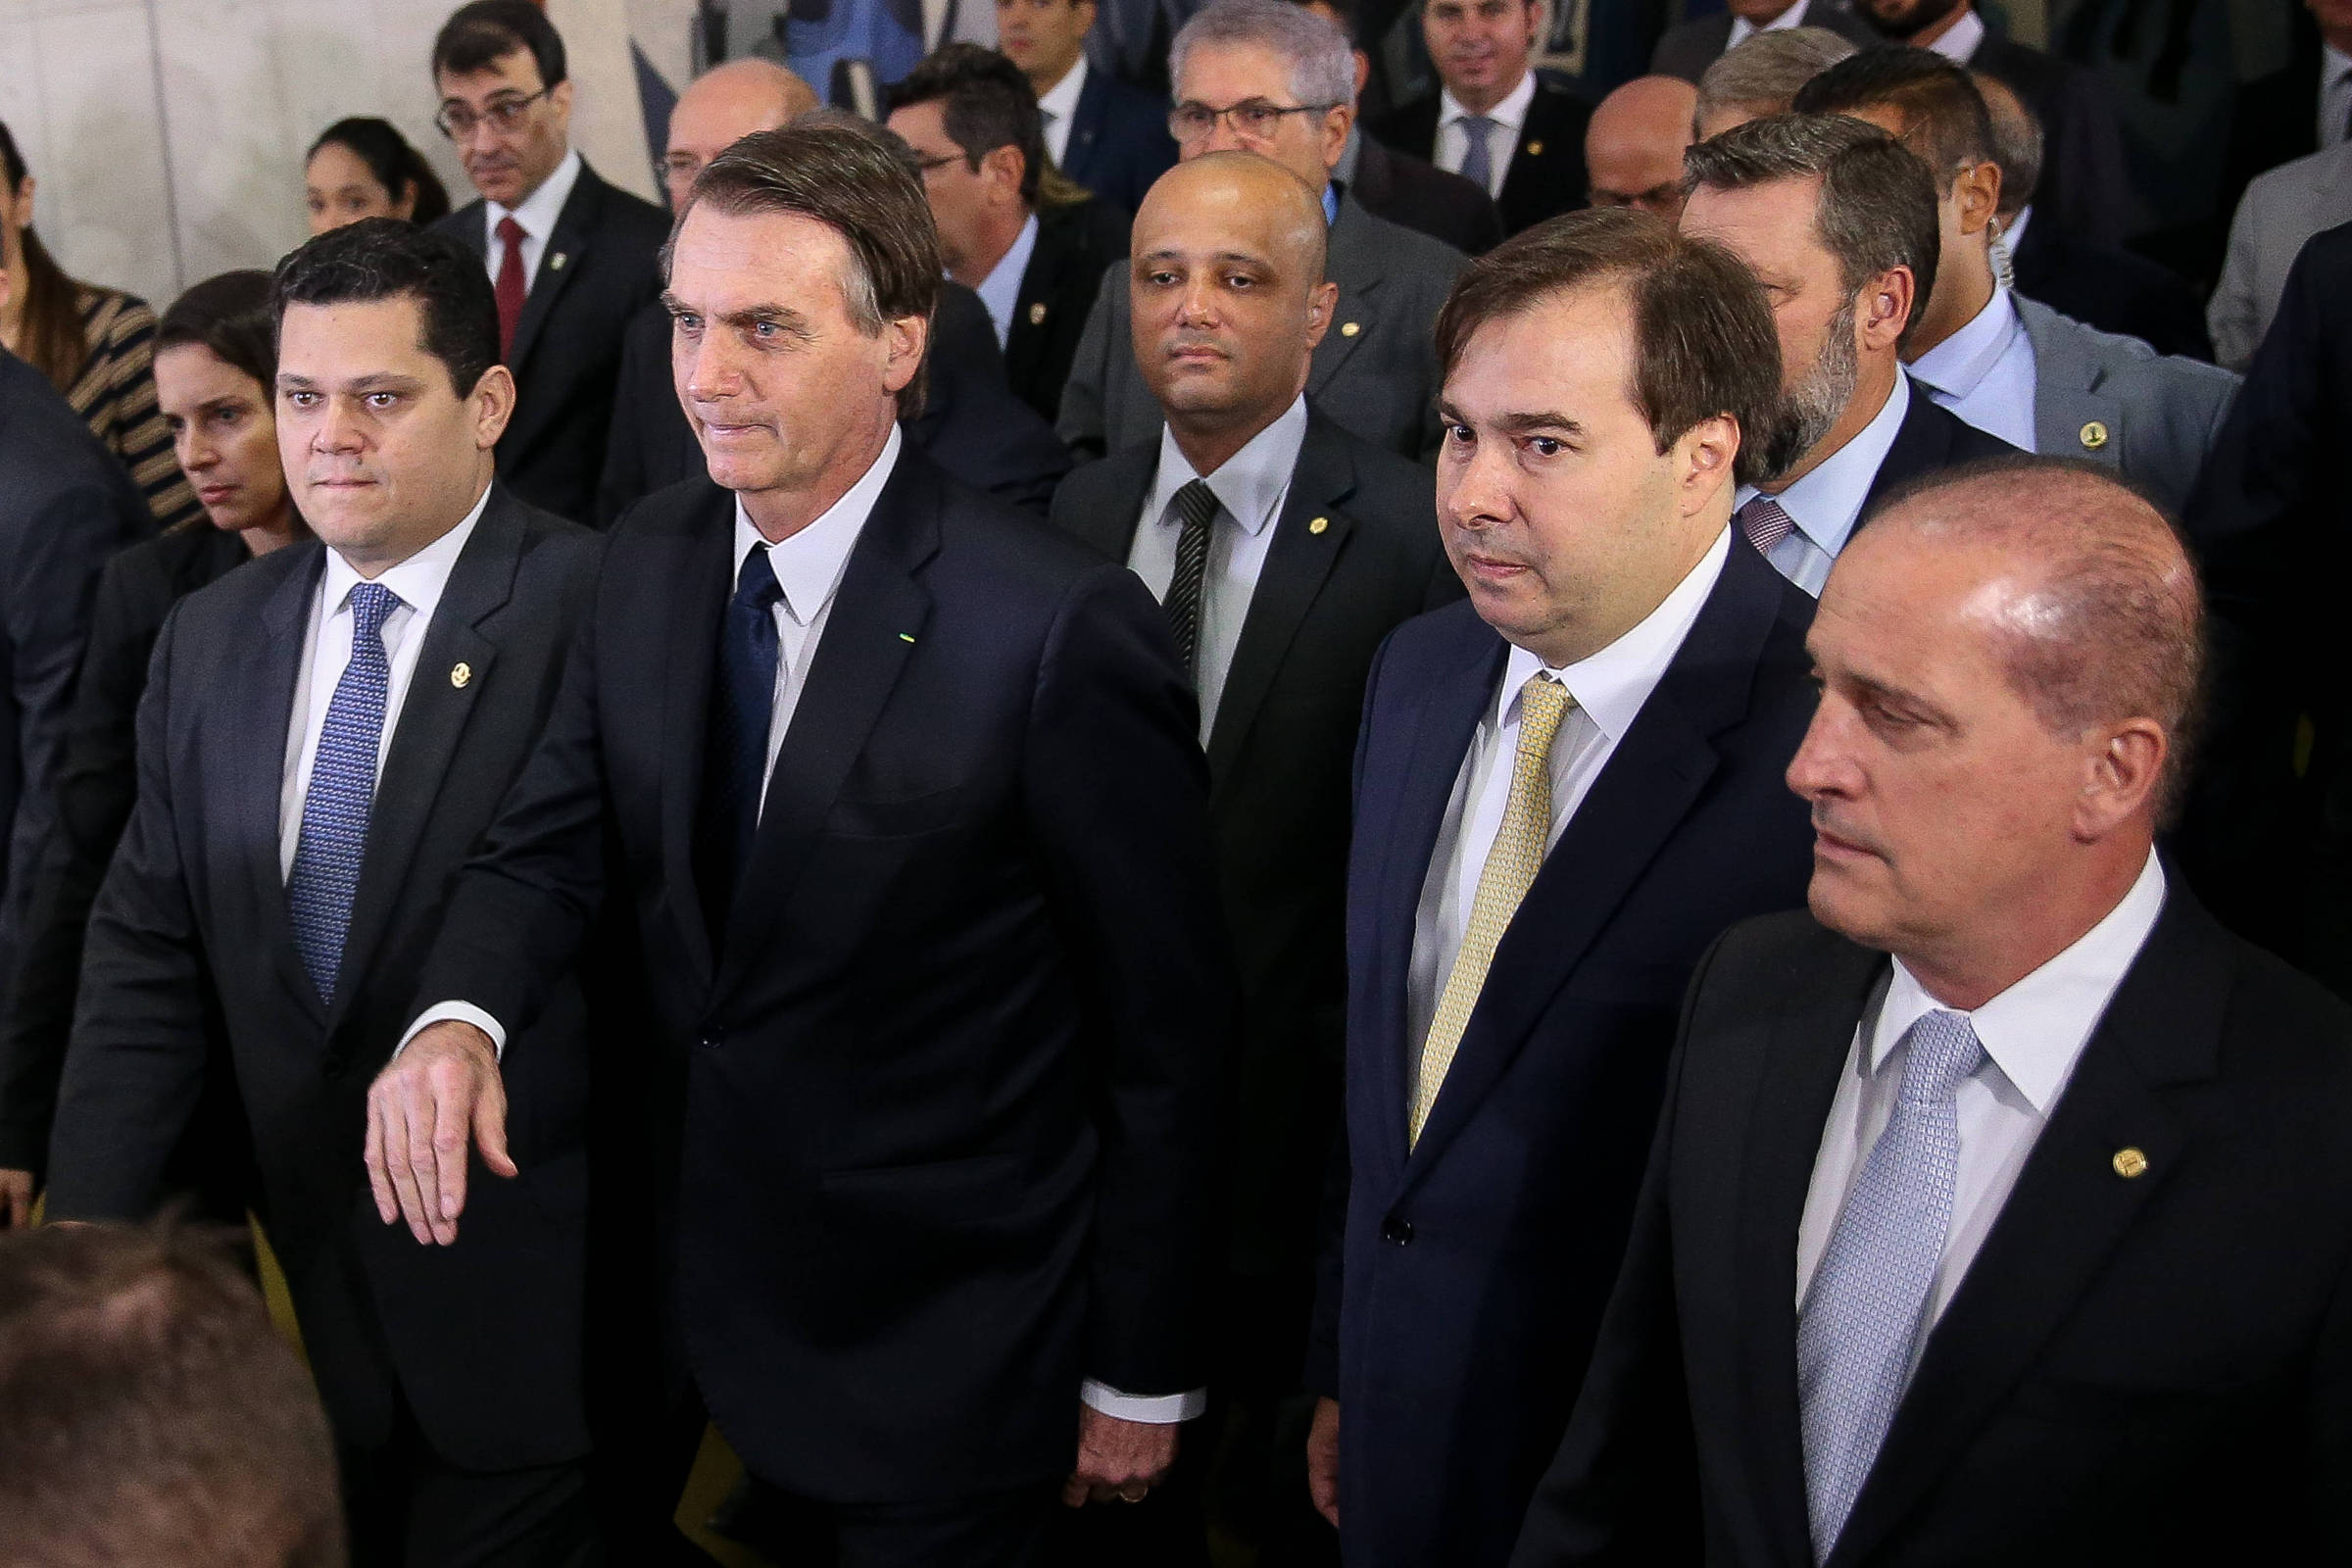 Sob crise política, Bolsonaro entrega ao Congresso proposta de reforma da Previdência